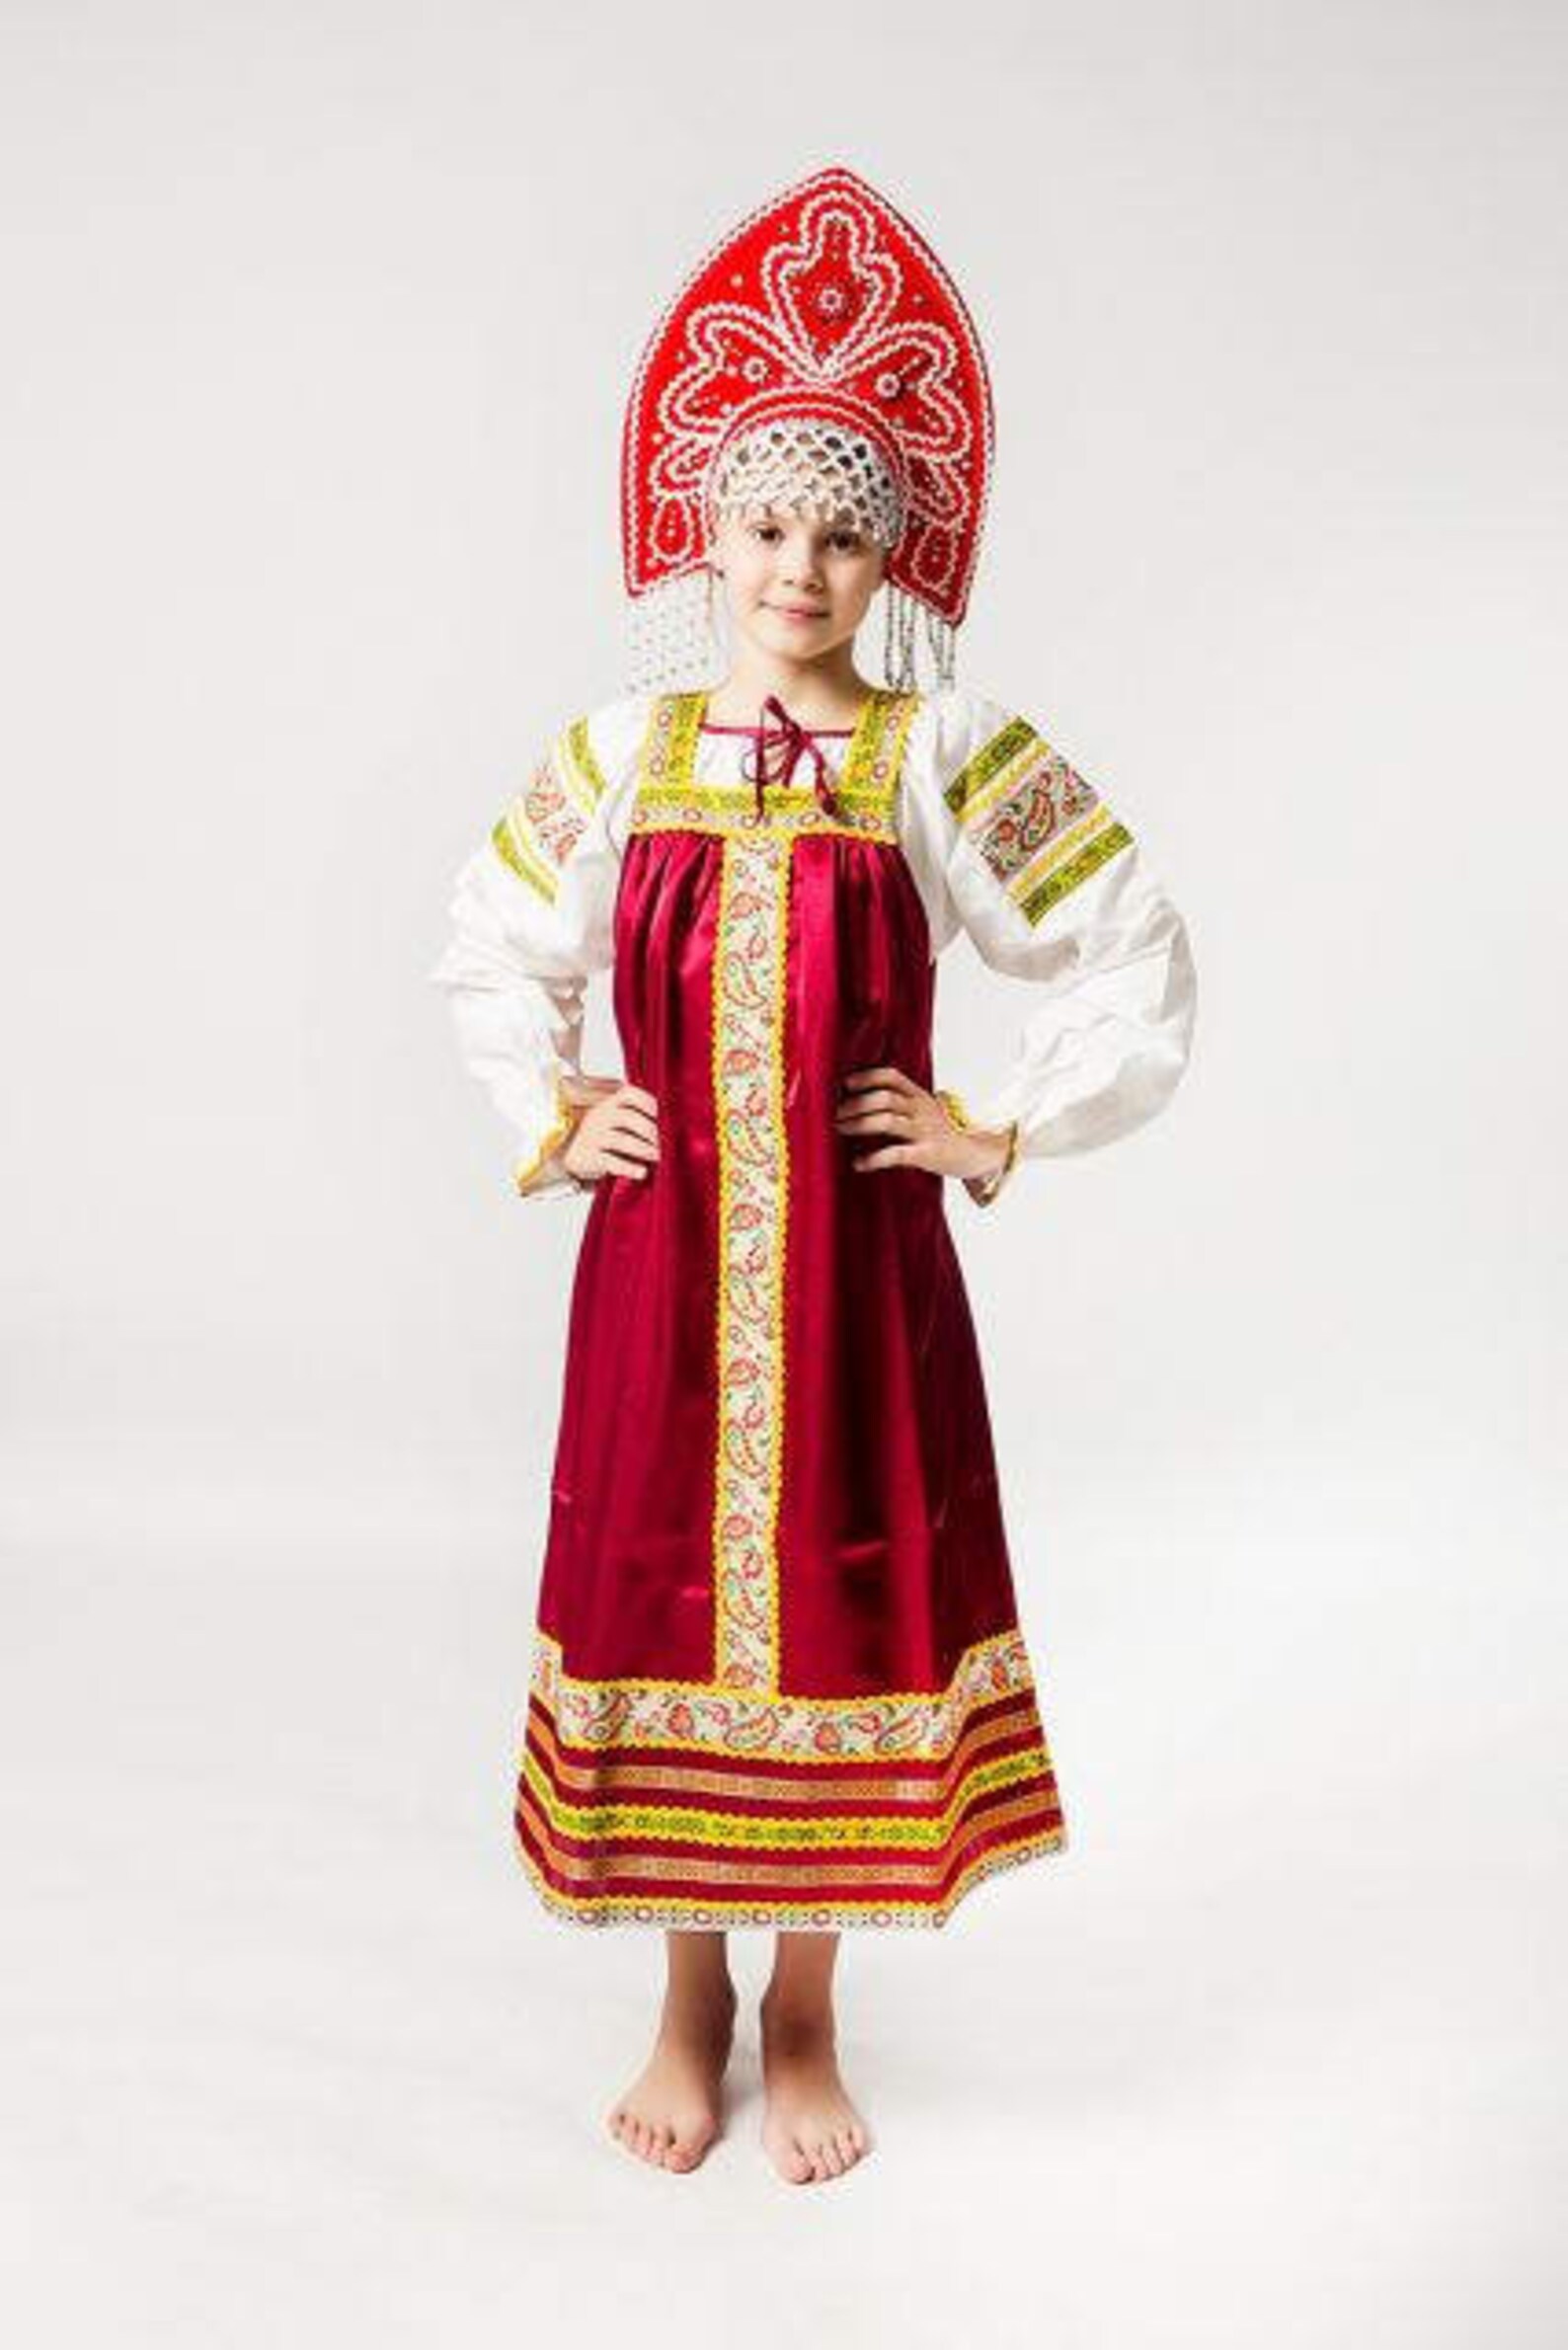 Russian dress for girl and woman Alenushka Slavic | Etsy